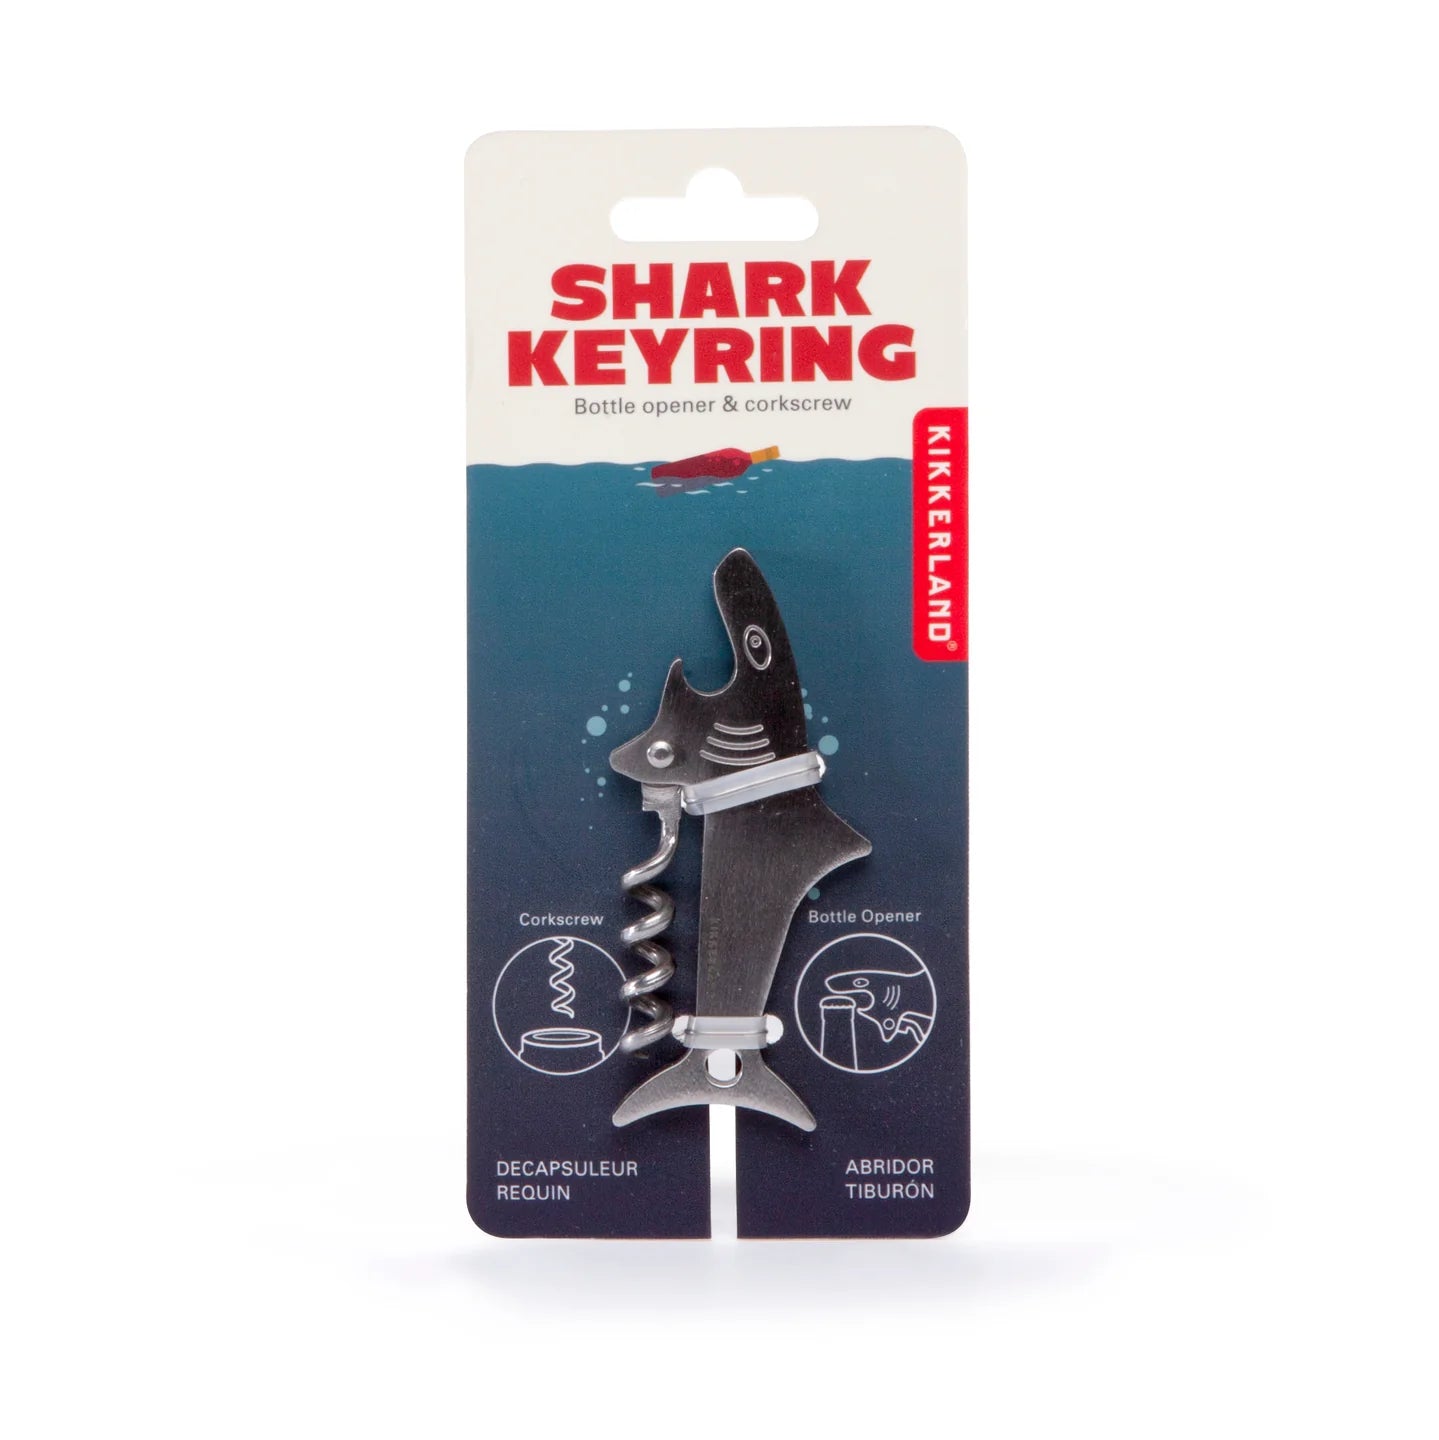 Fabulous Gifts | Kikkerland - Shark Key Ring by Weirs of Baggot Street